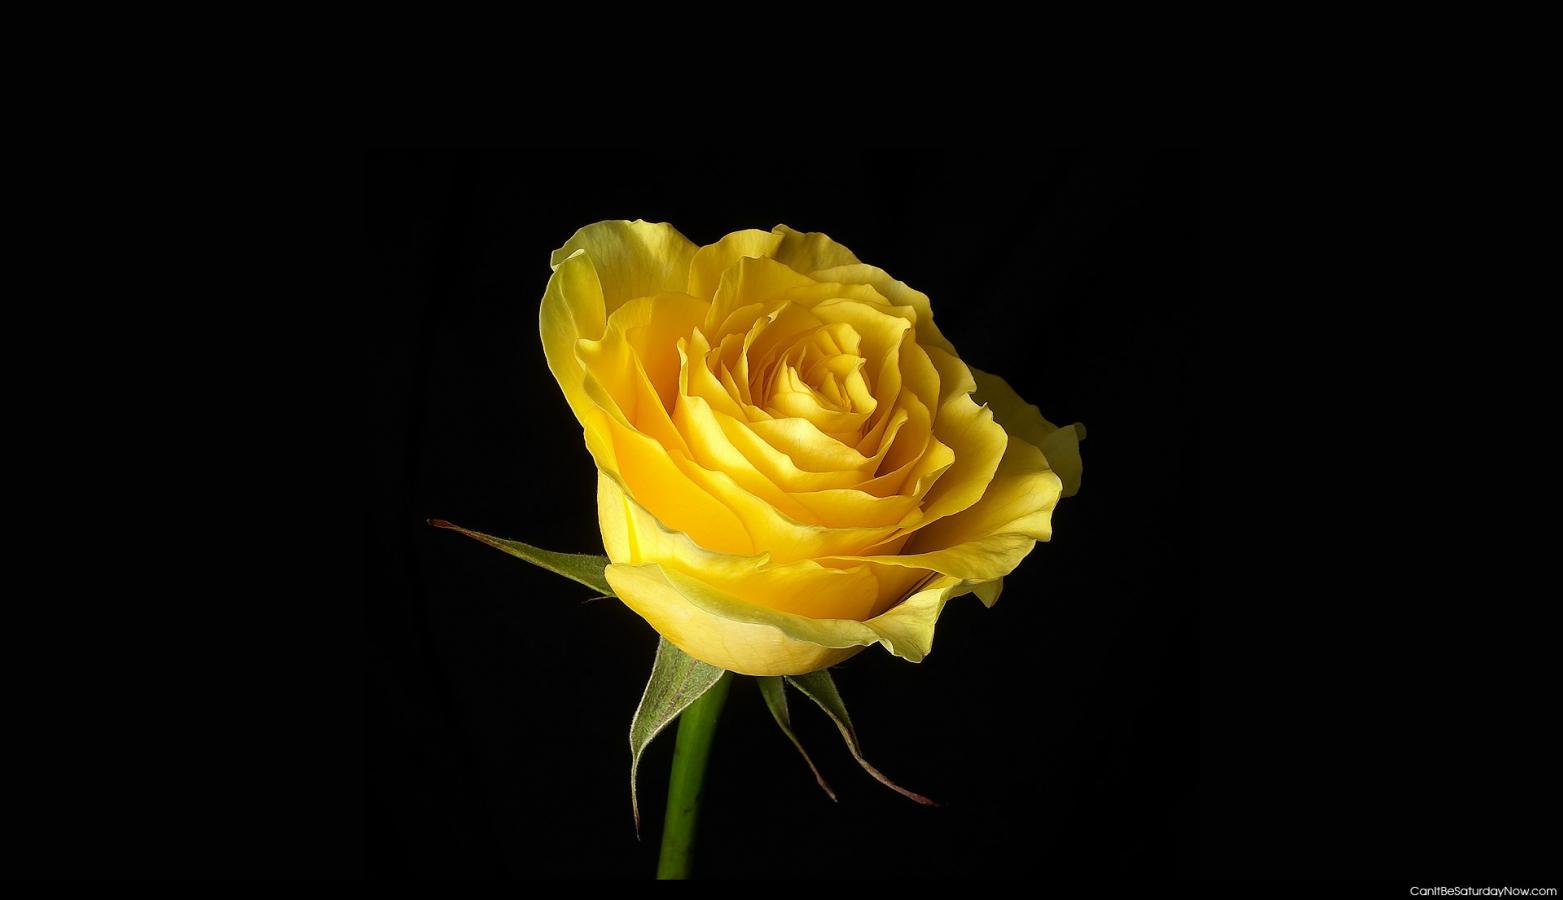 Yellow rose - one yellow rose